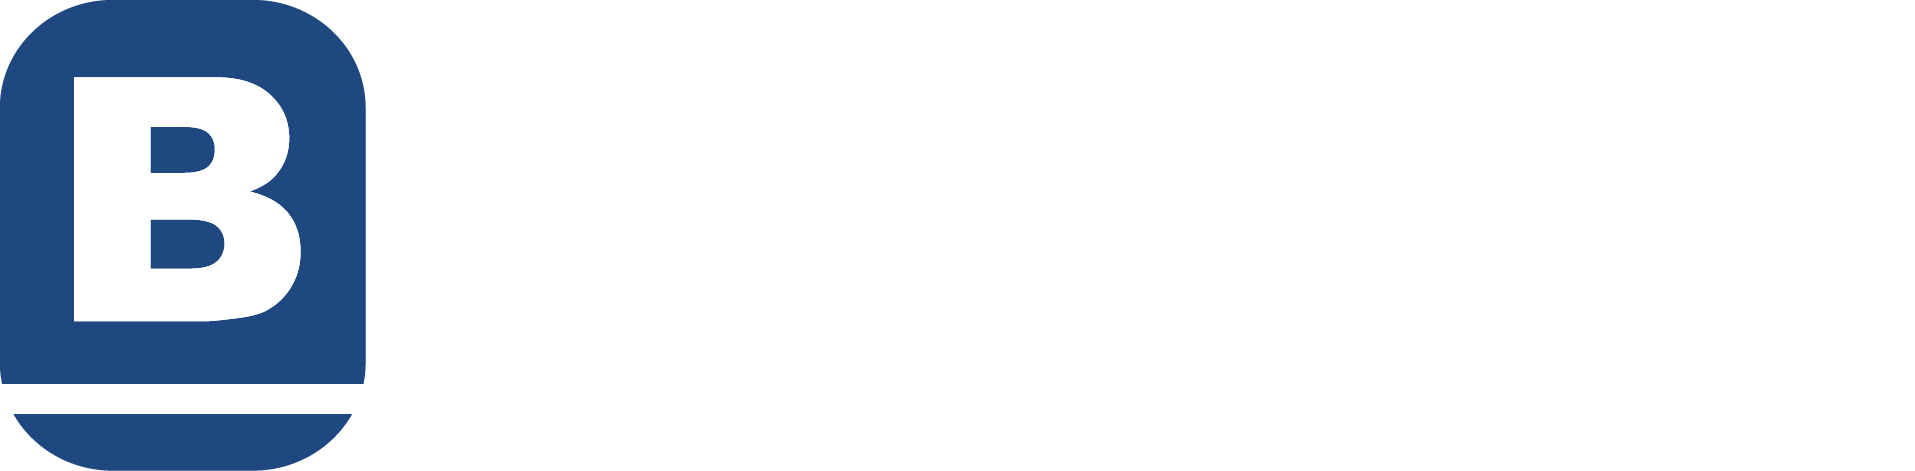 Blachford - Chemical Specialties